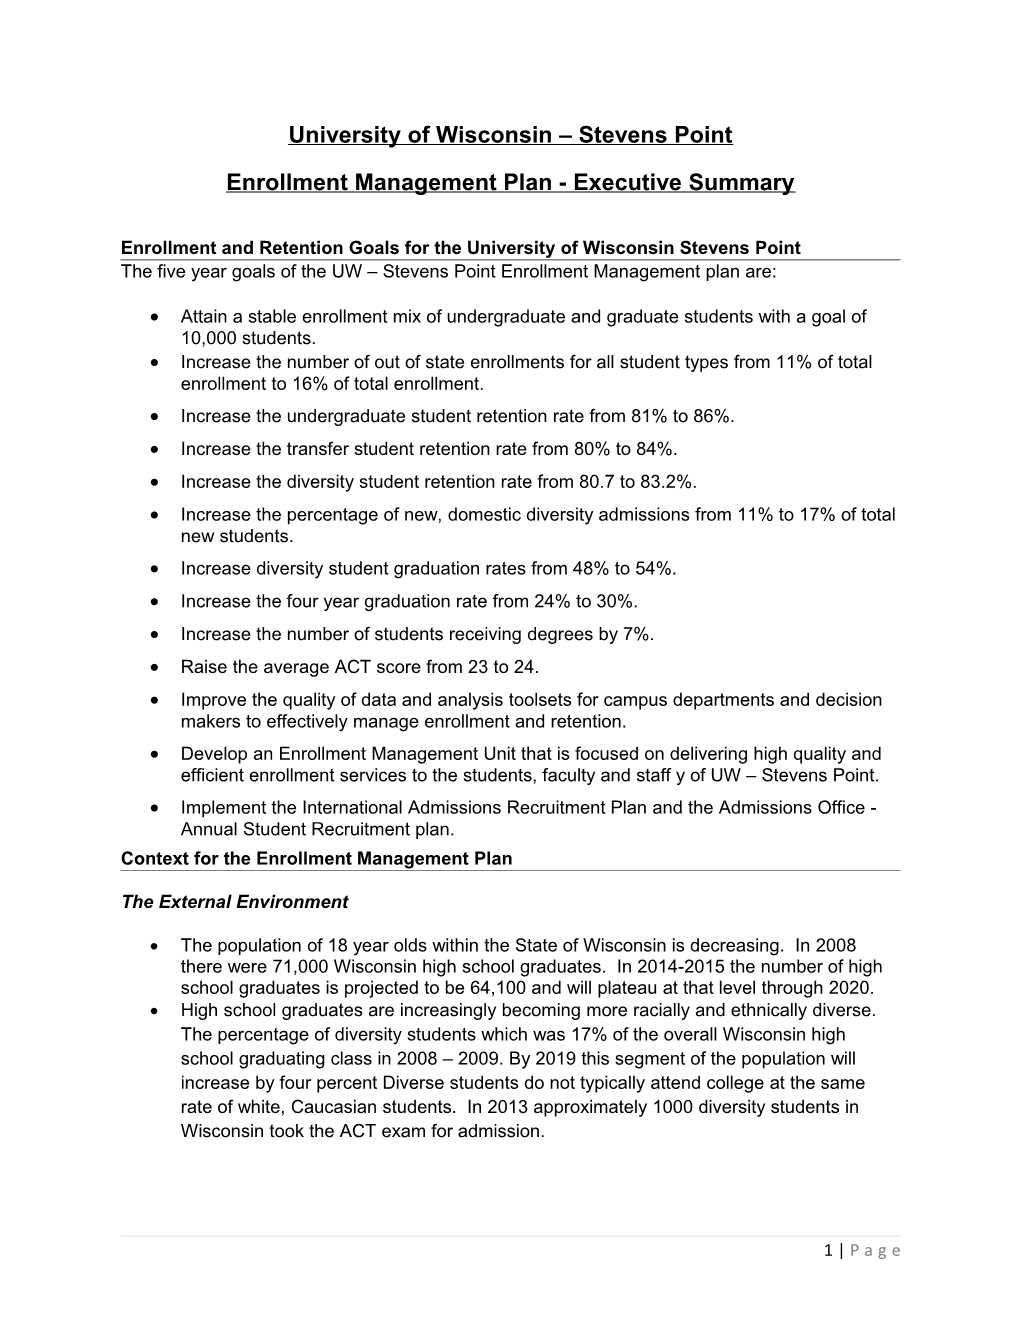 UW - Stevens Point Enrollment Management Plan, Executive Summary